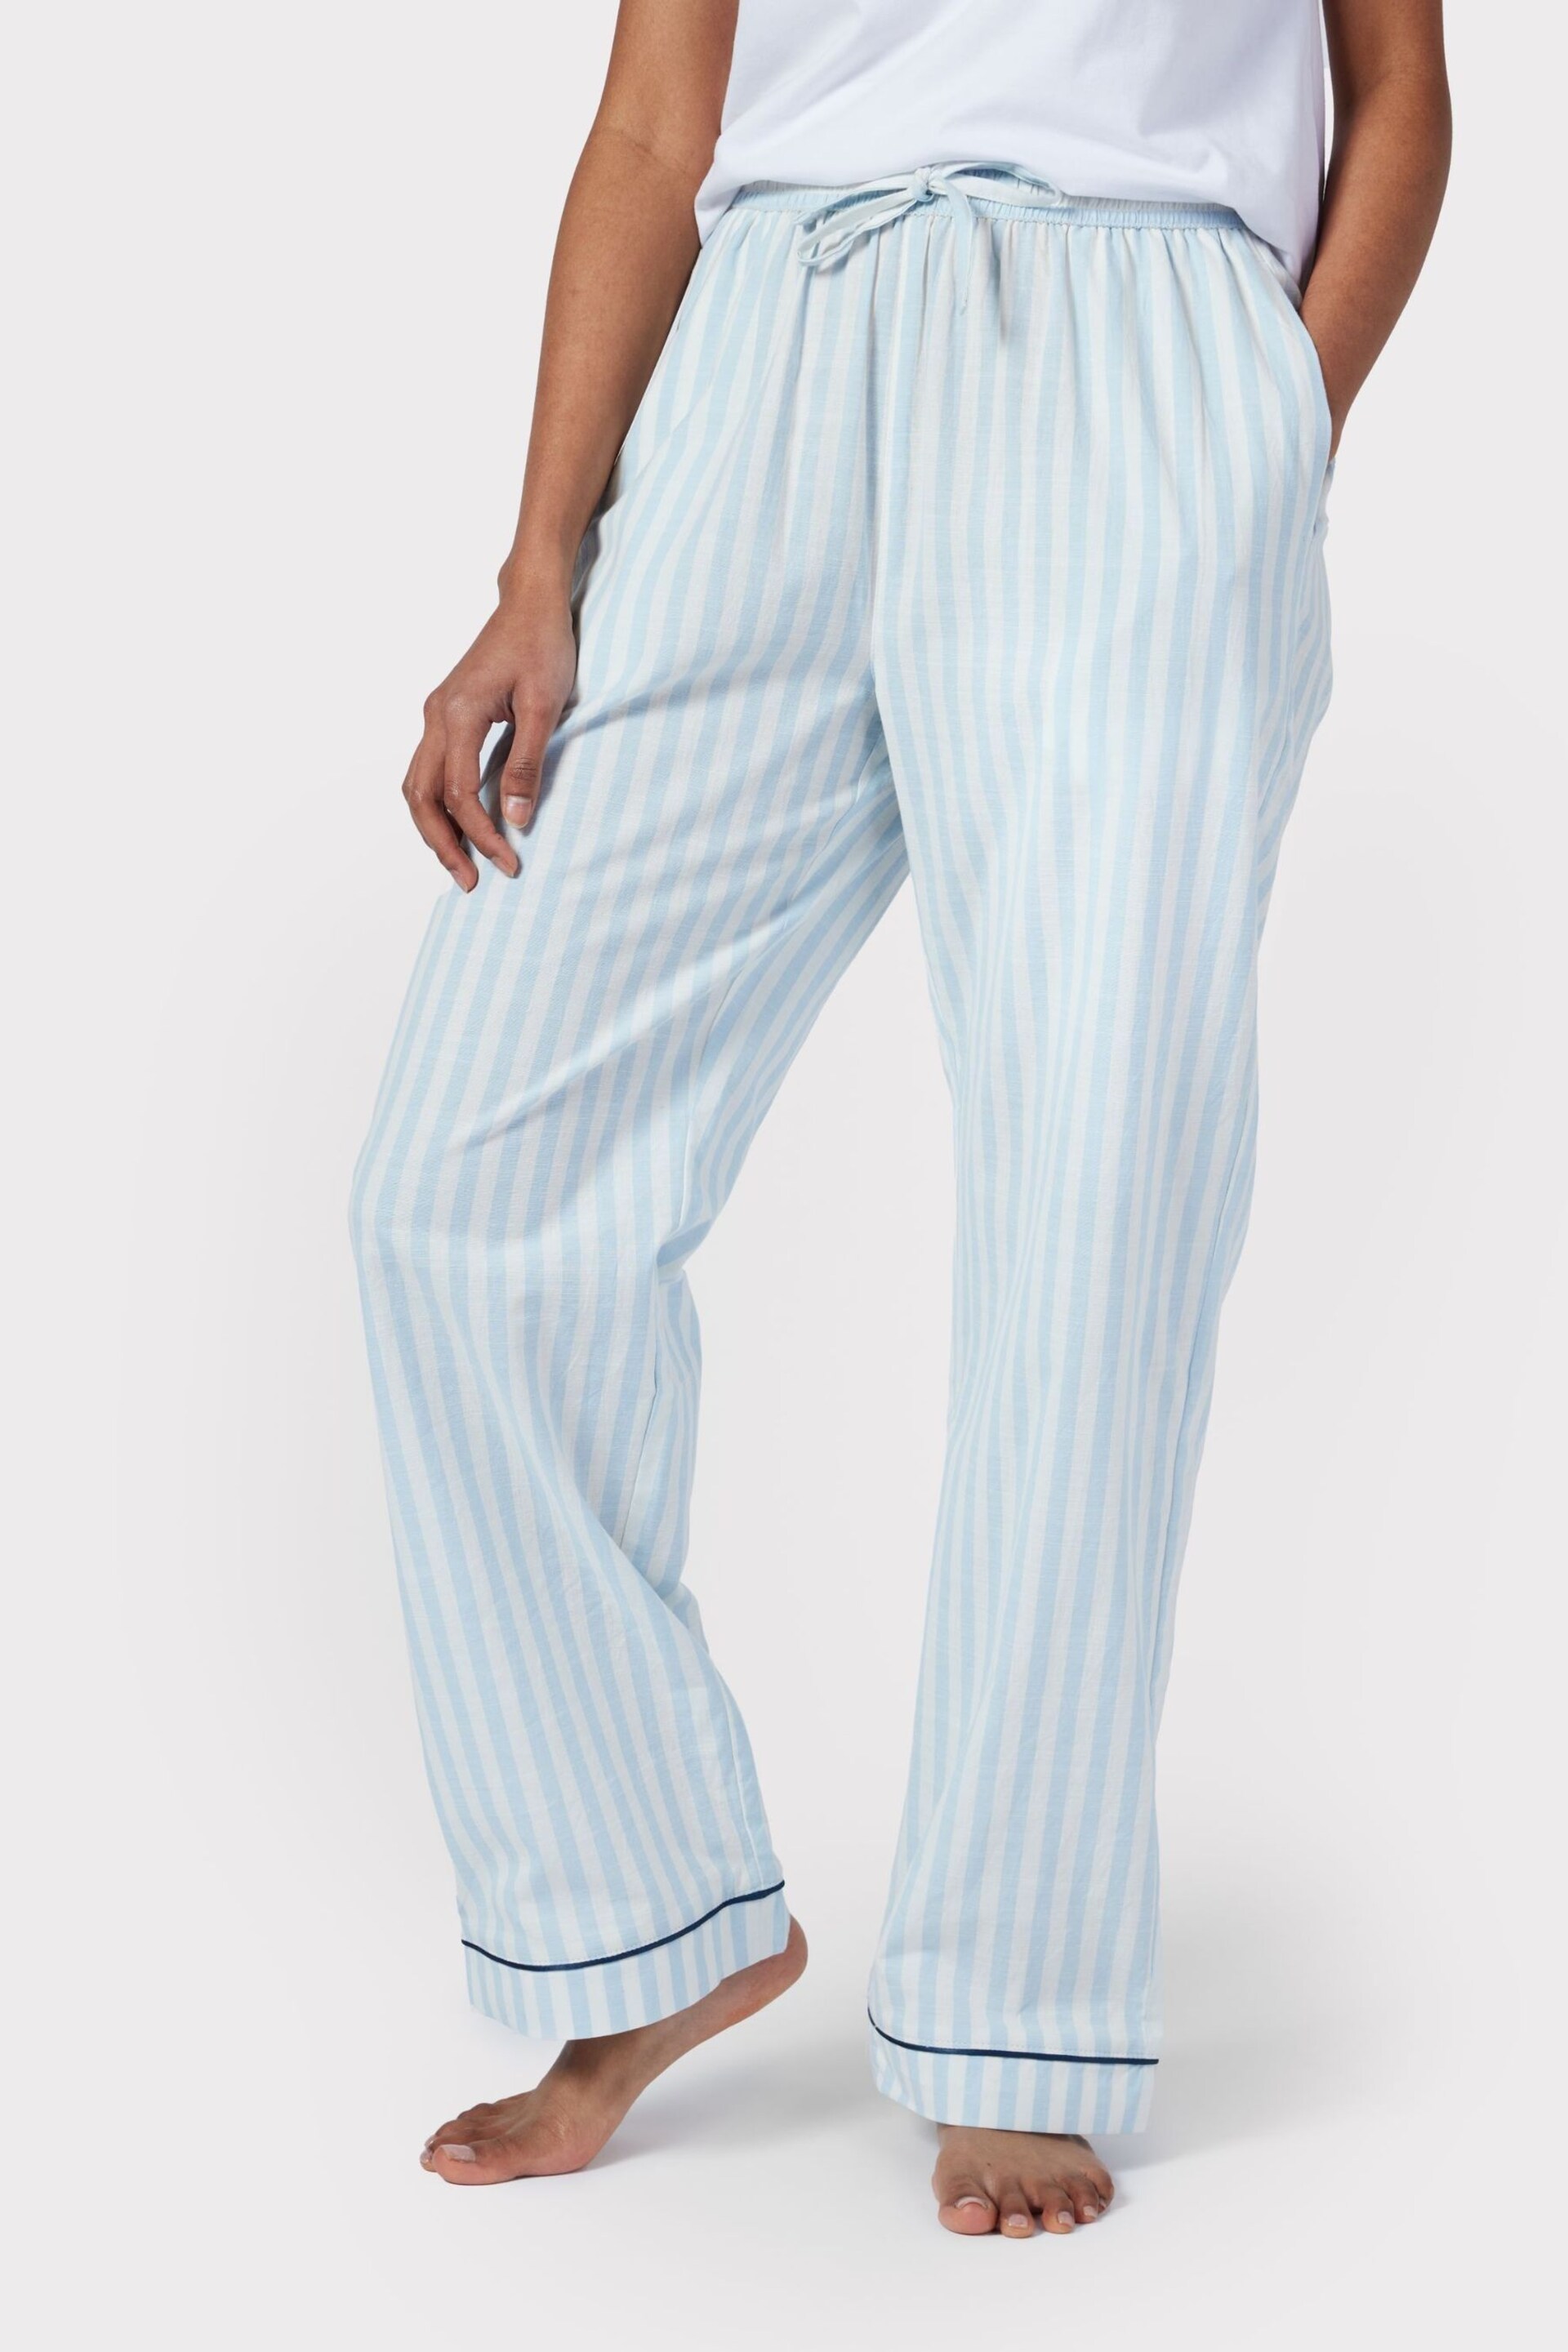 Chelsea Peers Blue Poplin Stripe Long Pyjama Bottoms - Image 1 of 5